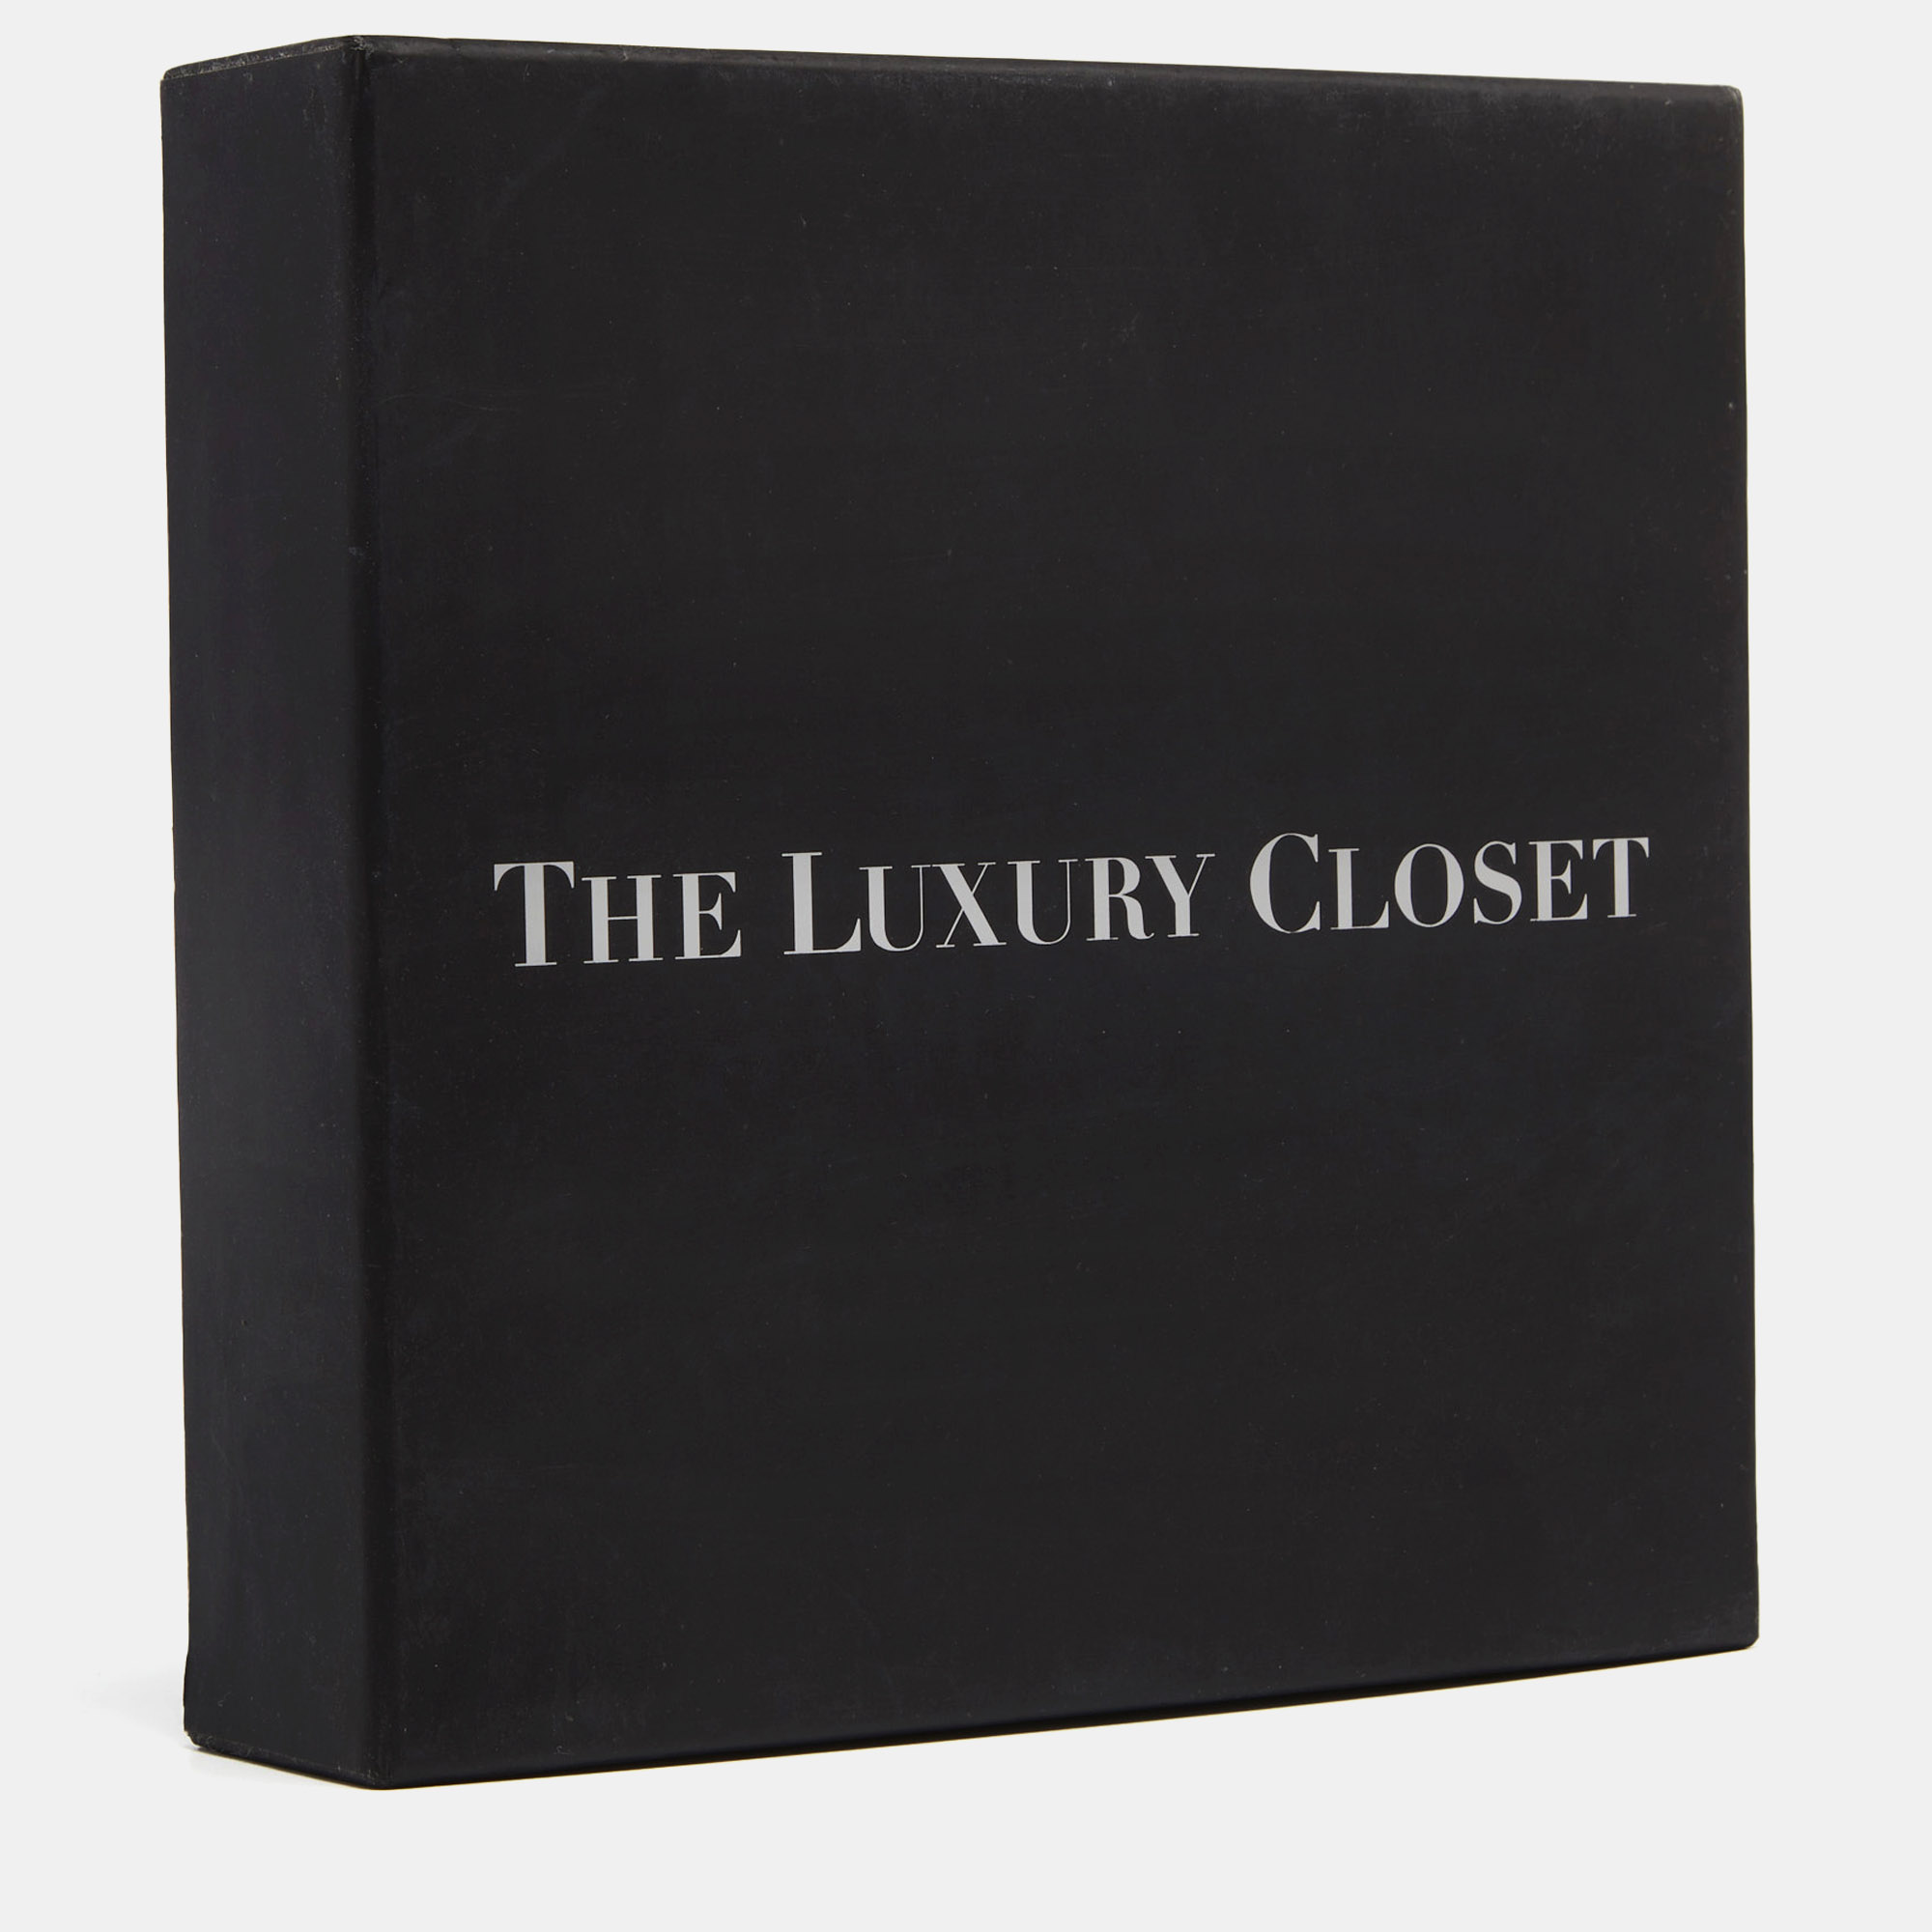 Louis Vuitton Black Braided Leather Chain Shoulder Bag Strap